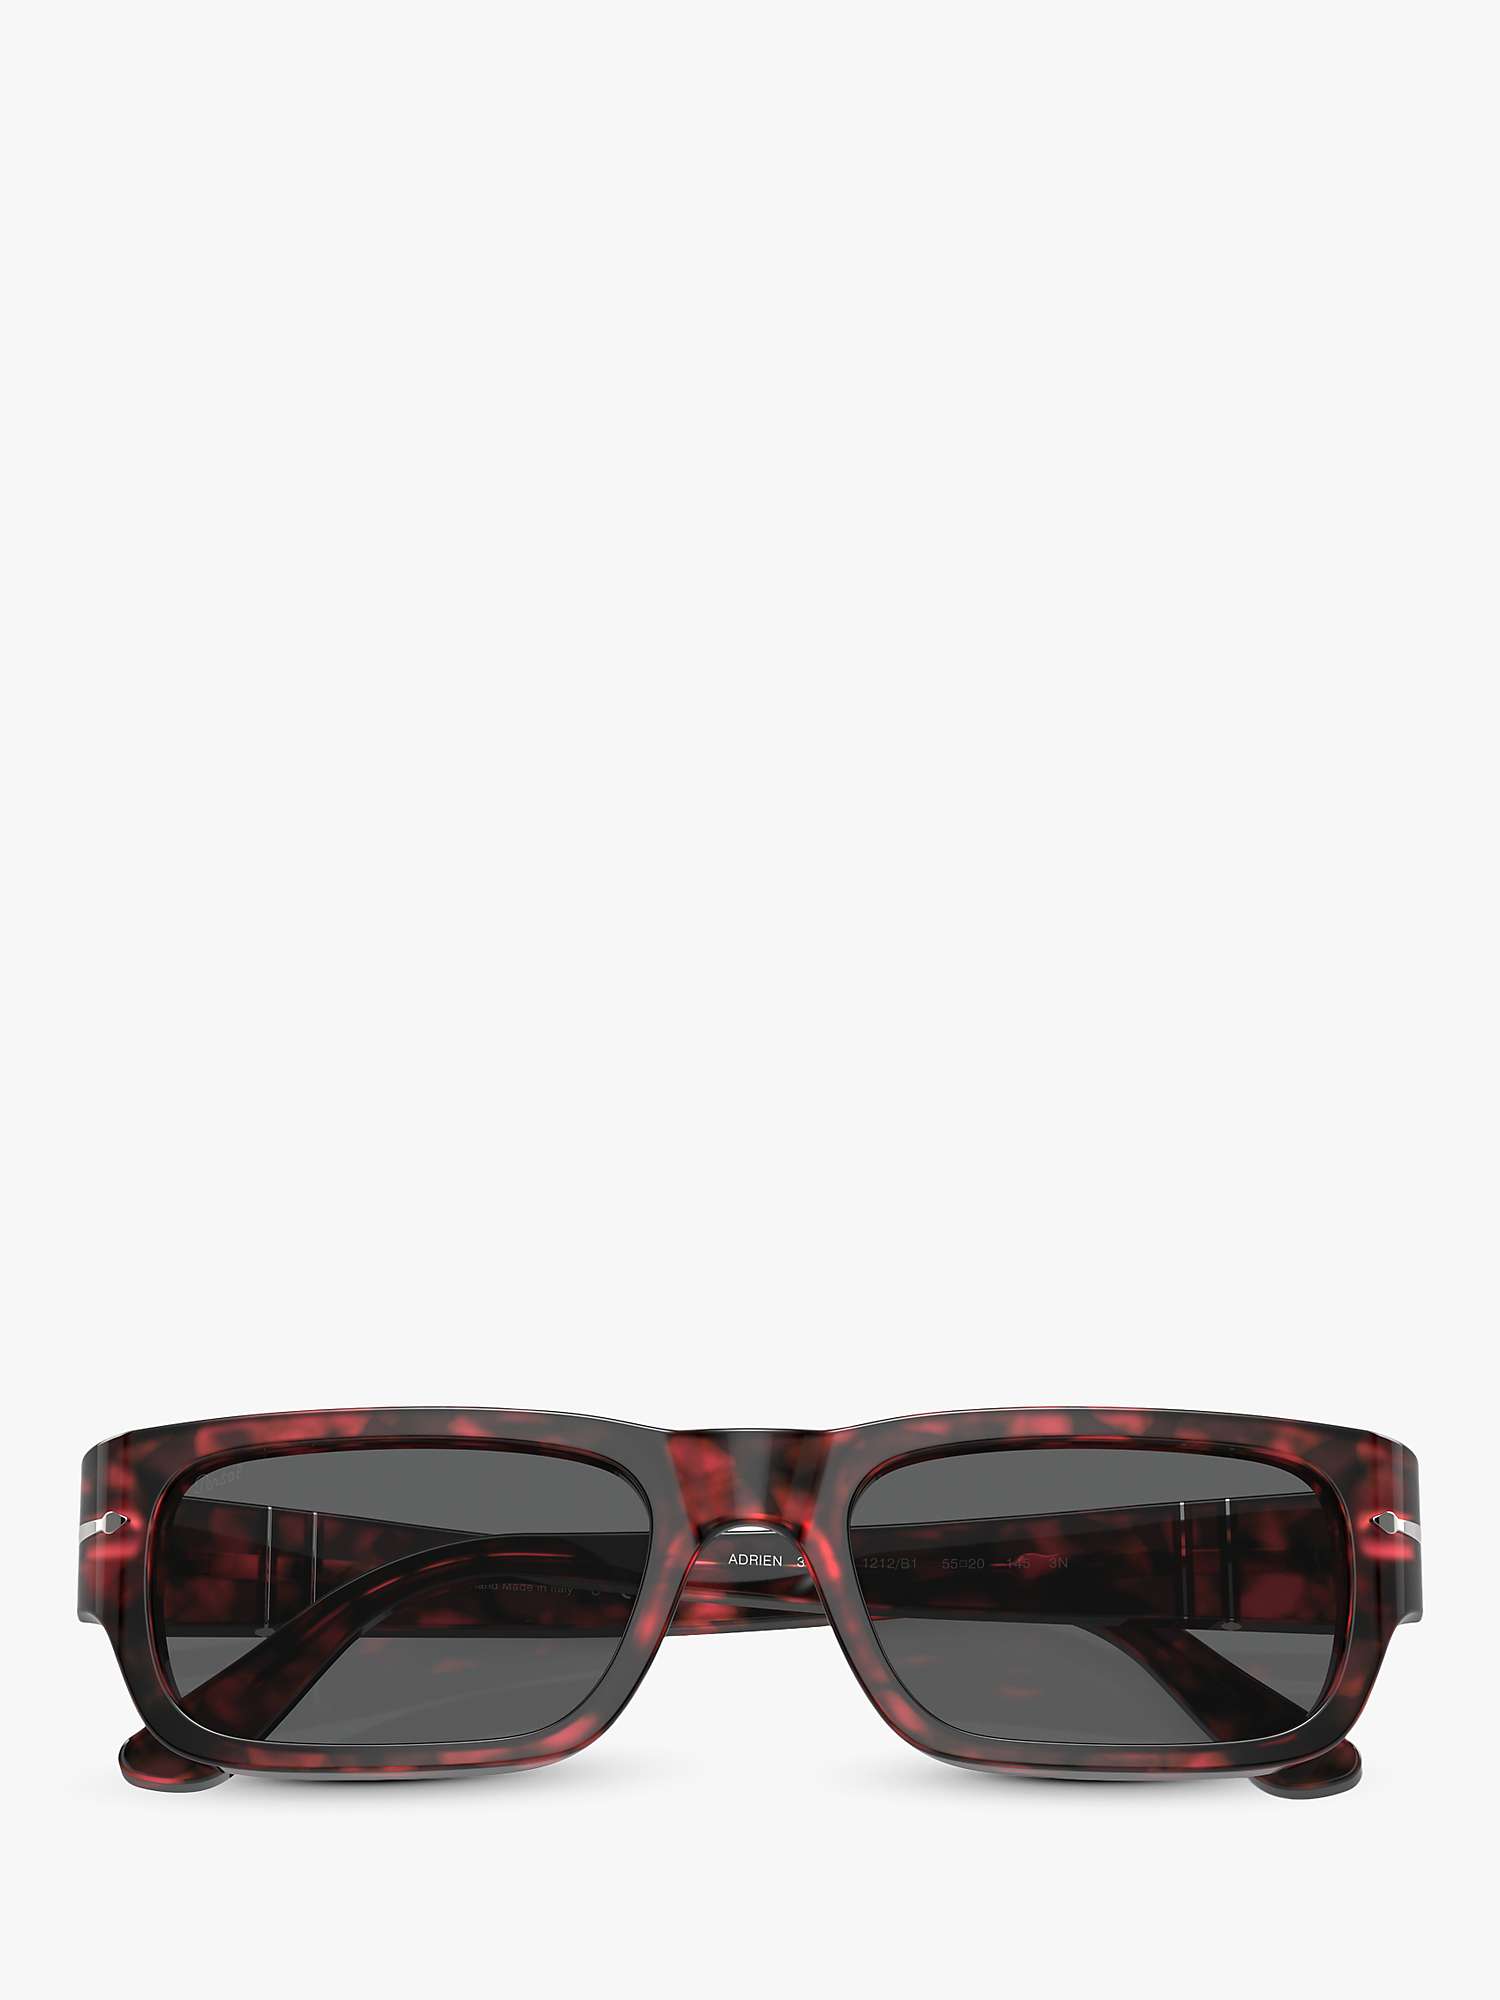 Buy Persol PO3347S Unisex Rectangular Sunglasses, Red Havana/Grey Online at johnlewis.com